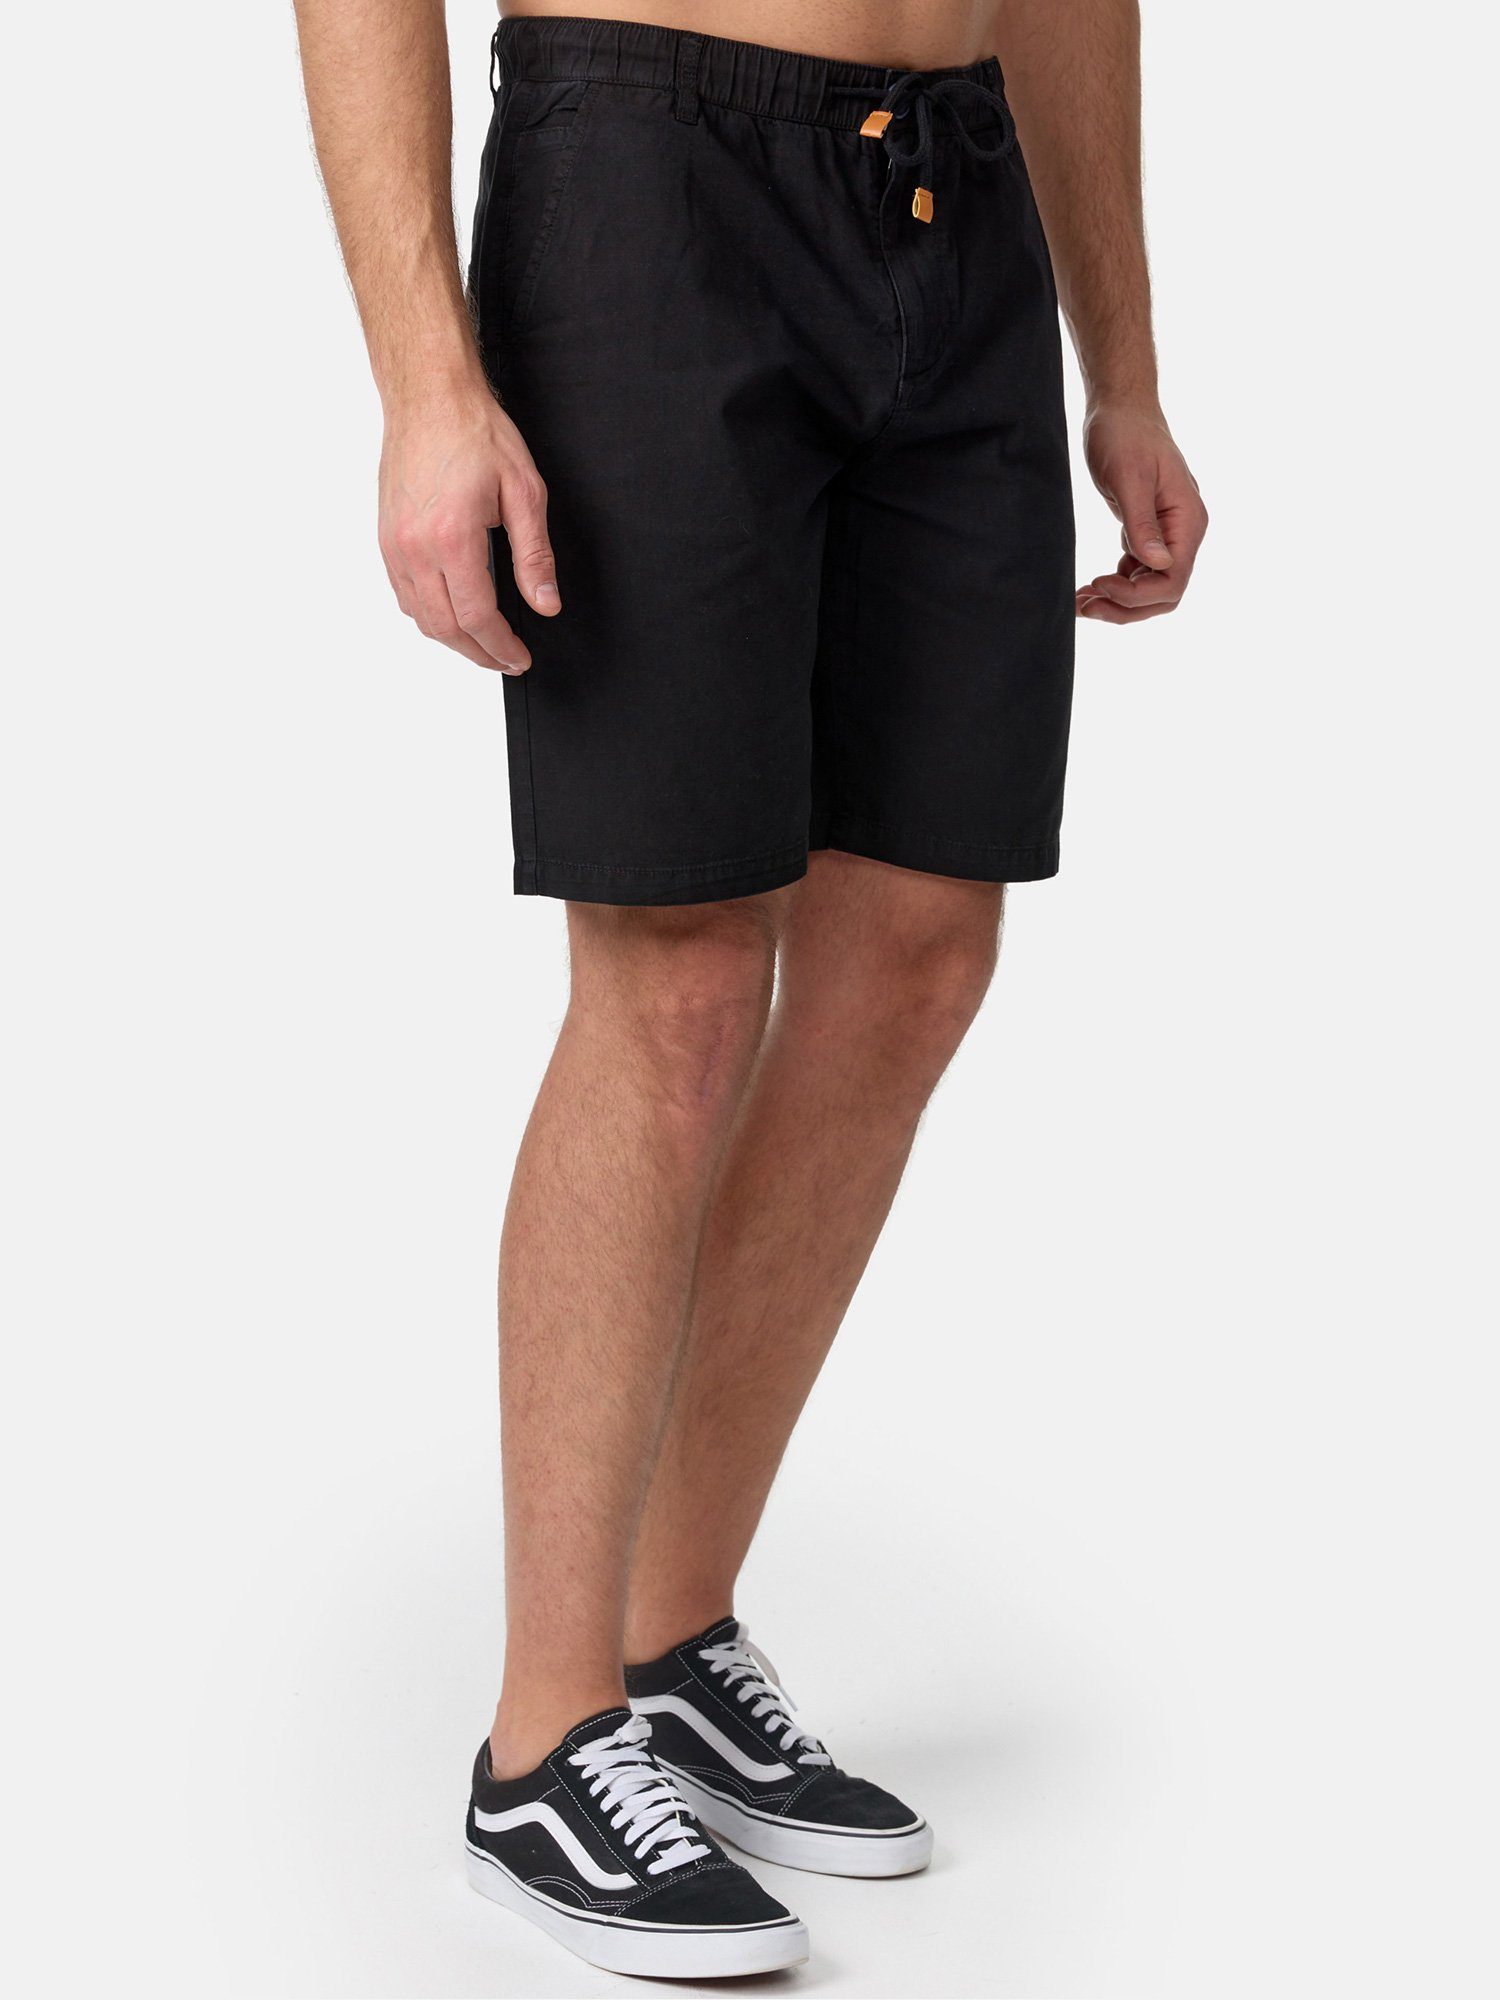 schwarz Hose in & A205 moderne Leinen-Optik zeitlose Shorts kurze Tazzio